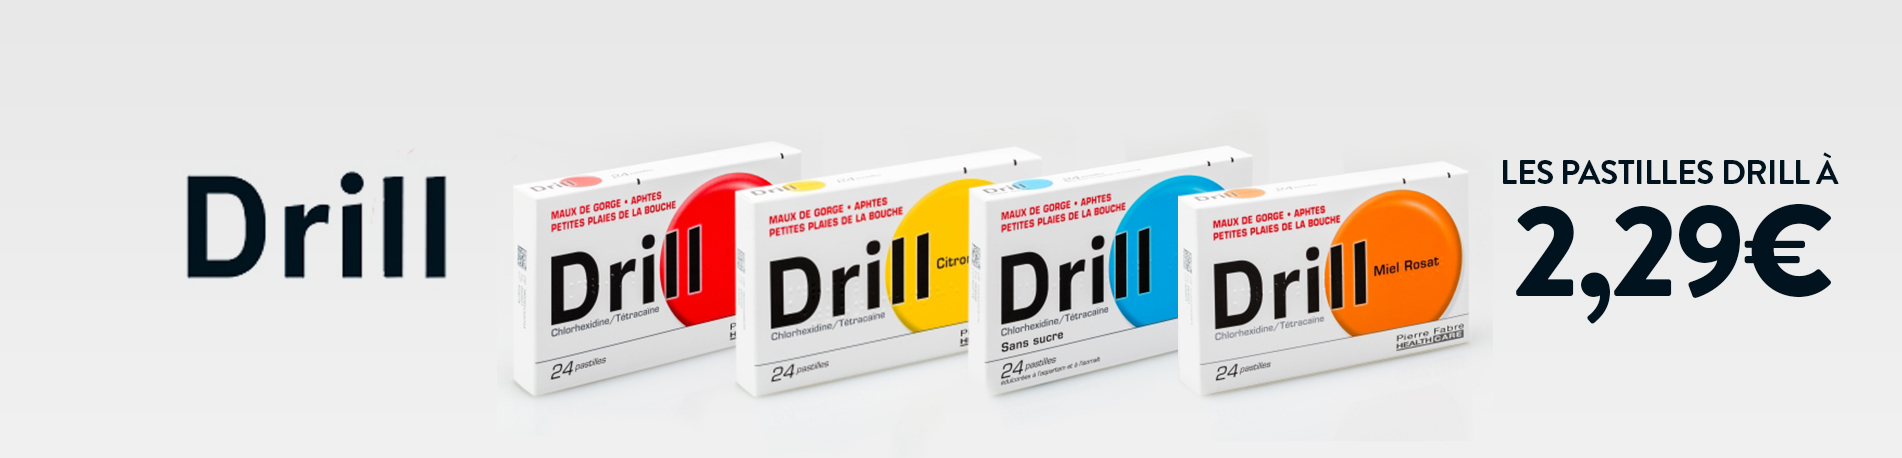 Promotion Drill pastilles